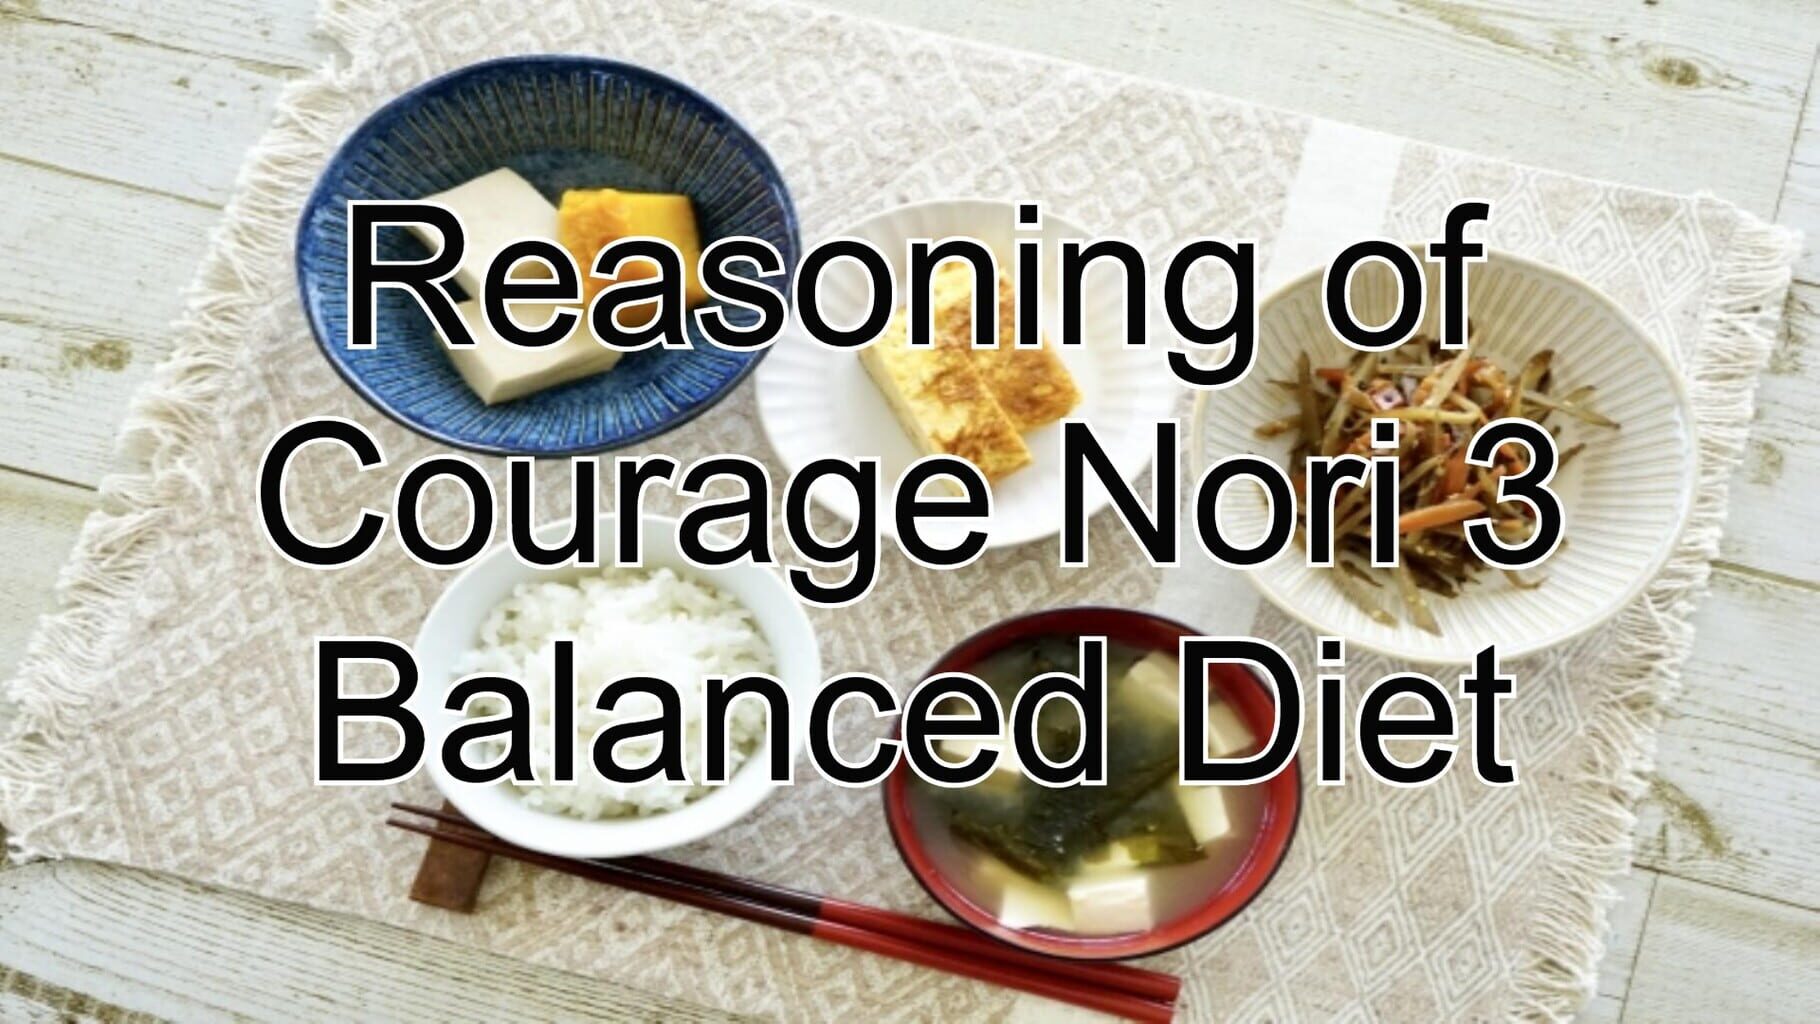 Arte - Reasoning of Courage Nori 3 Balanced Diet